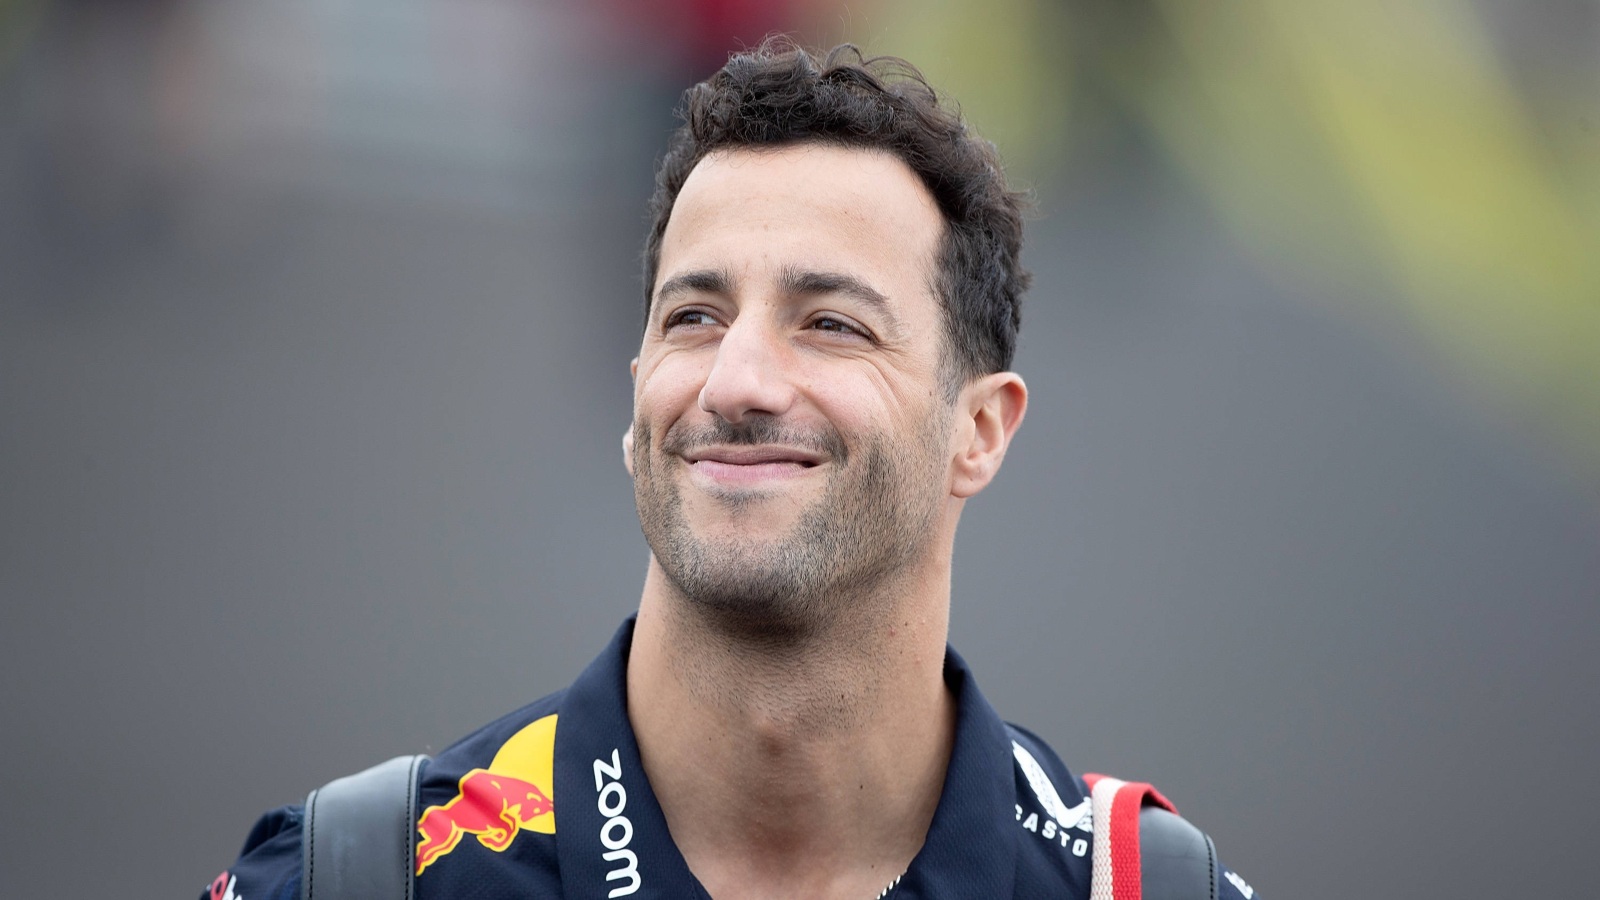 Daniel Ricciardo smiling as he arrives at the track. Montreal, Canada. June 2023.